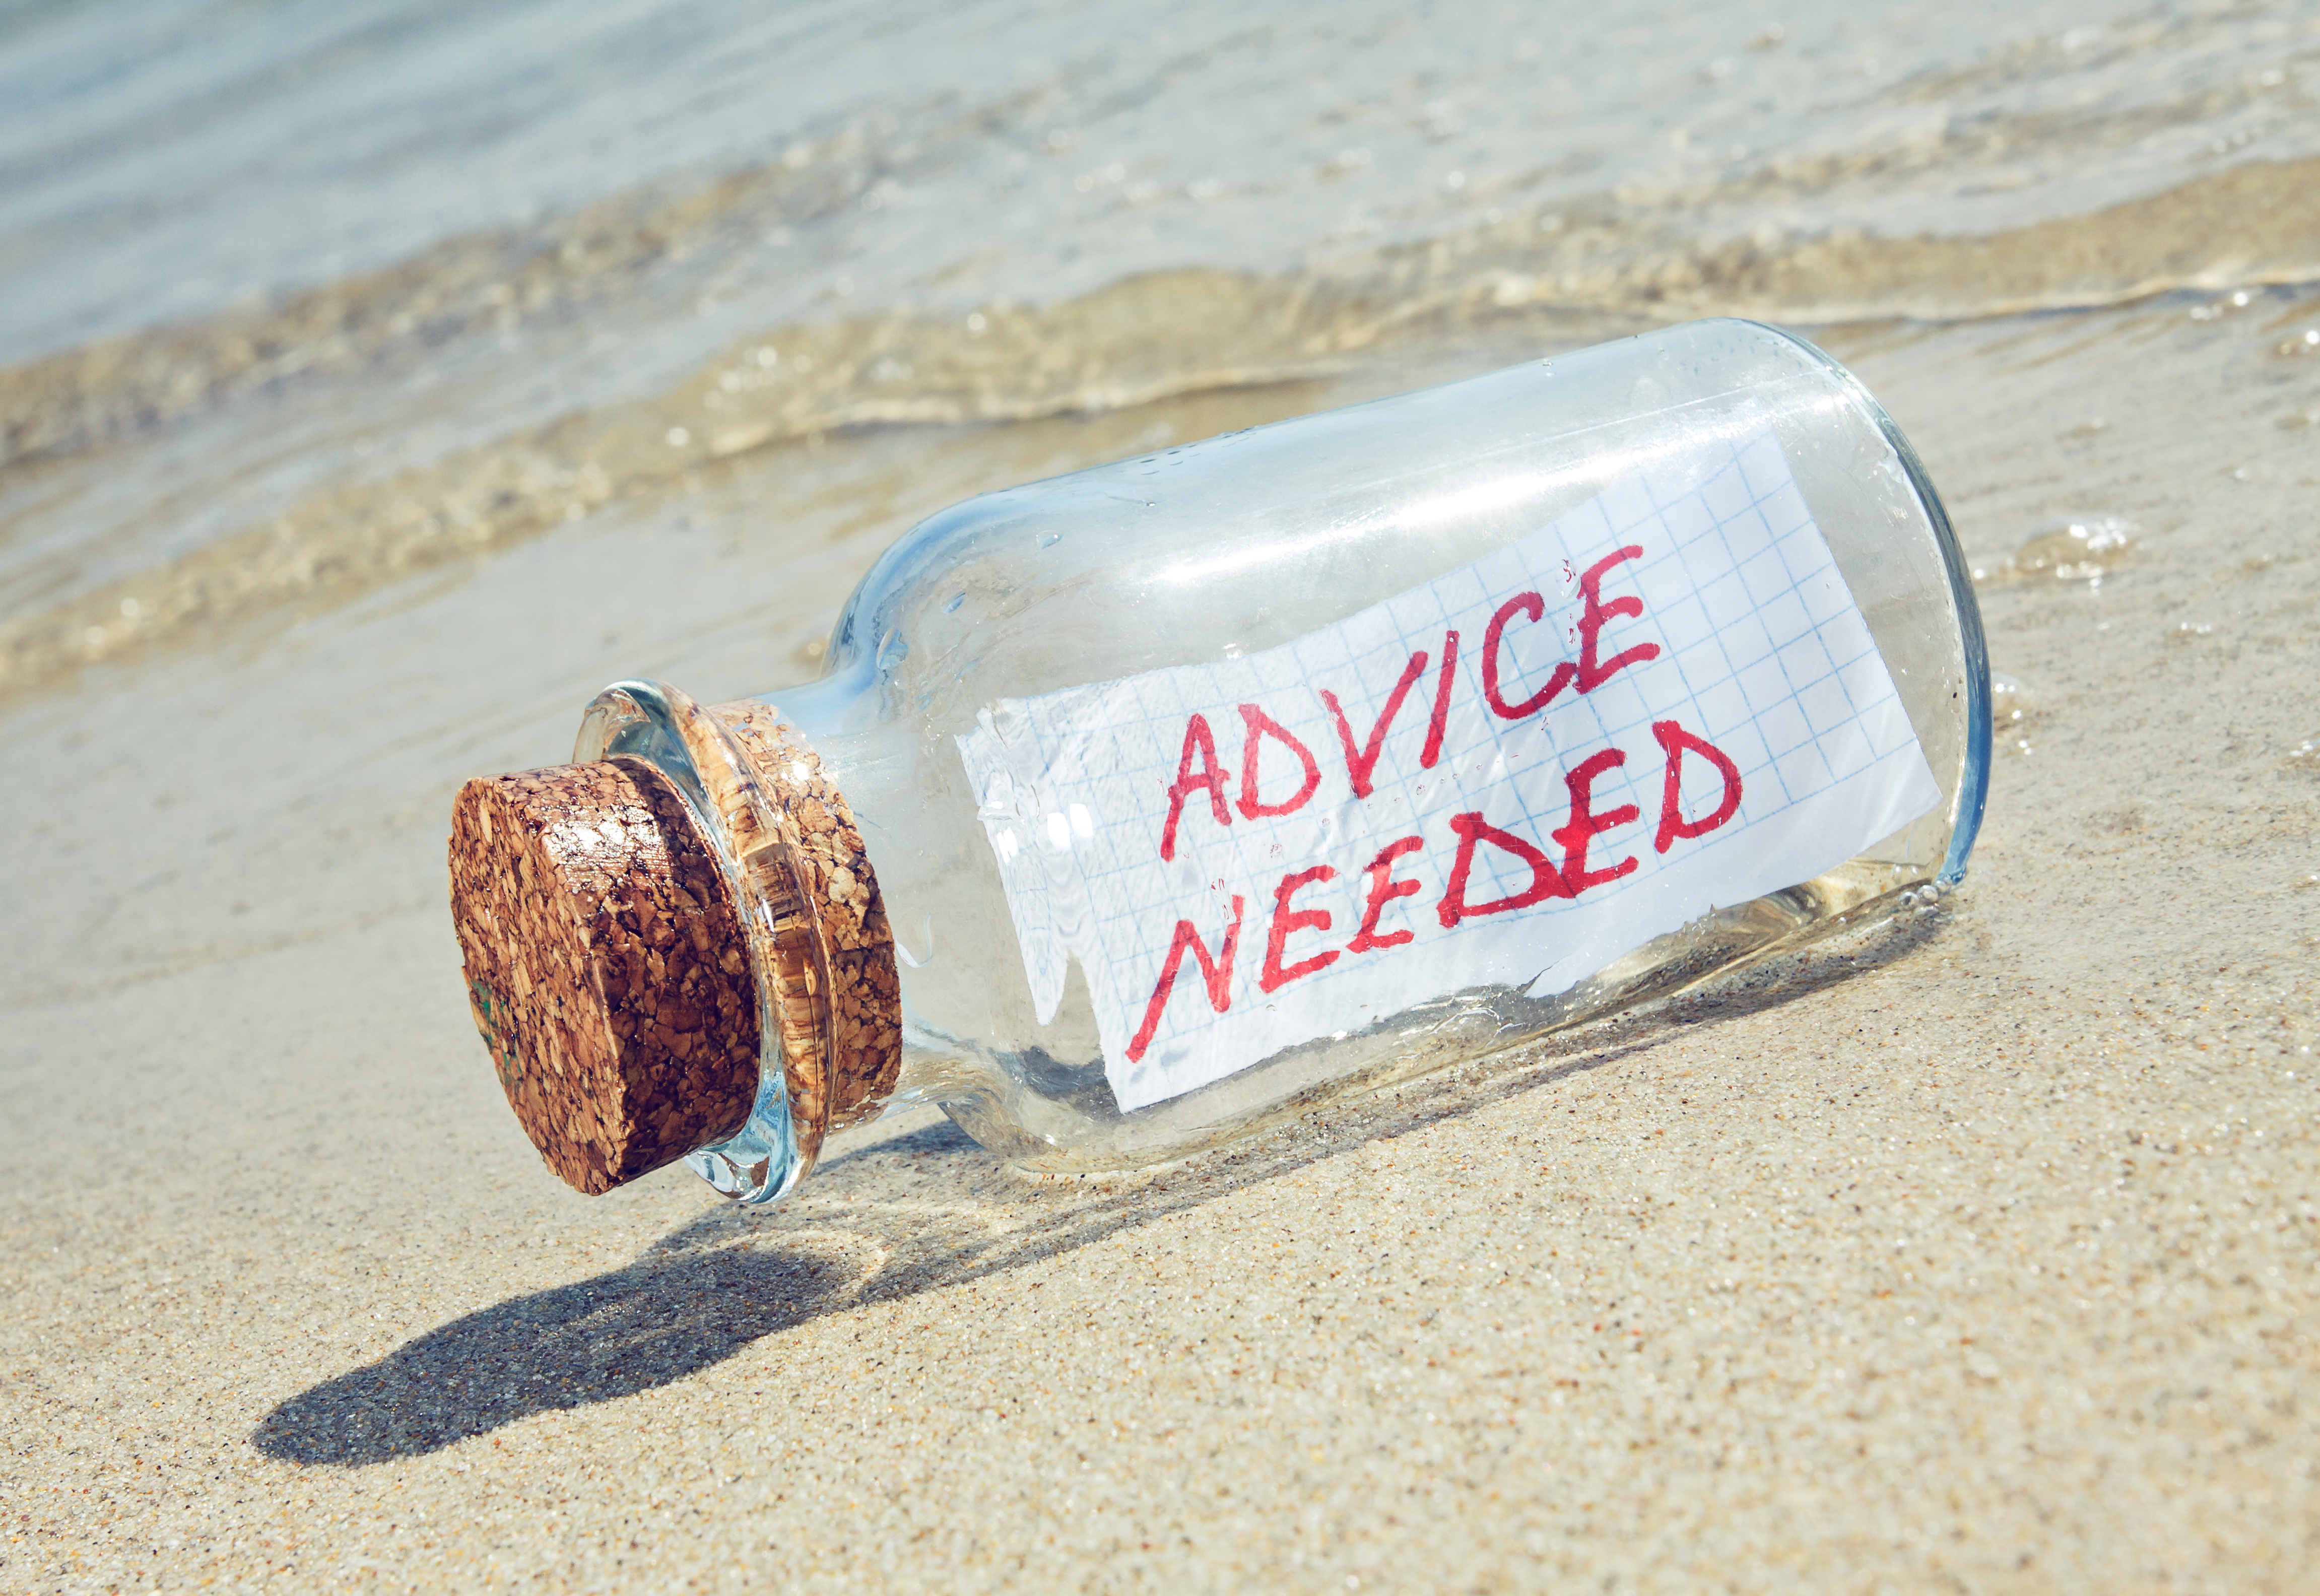 A message in a bottle | Source: Shutterstock